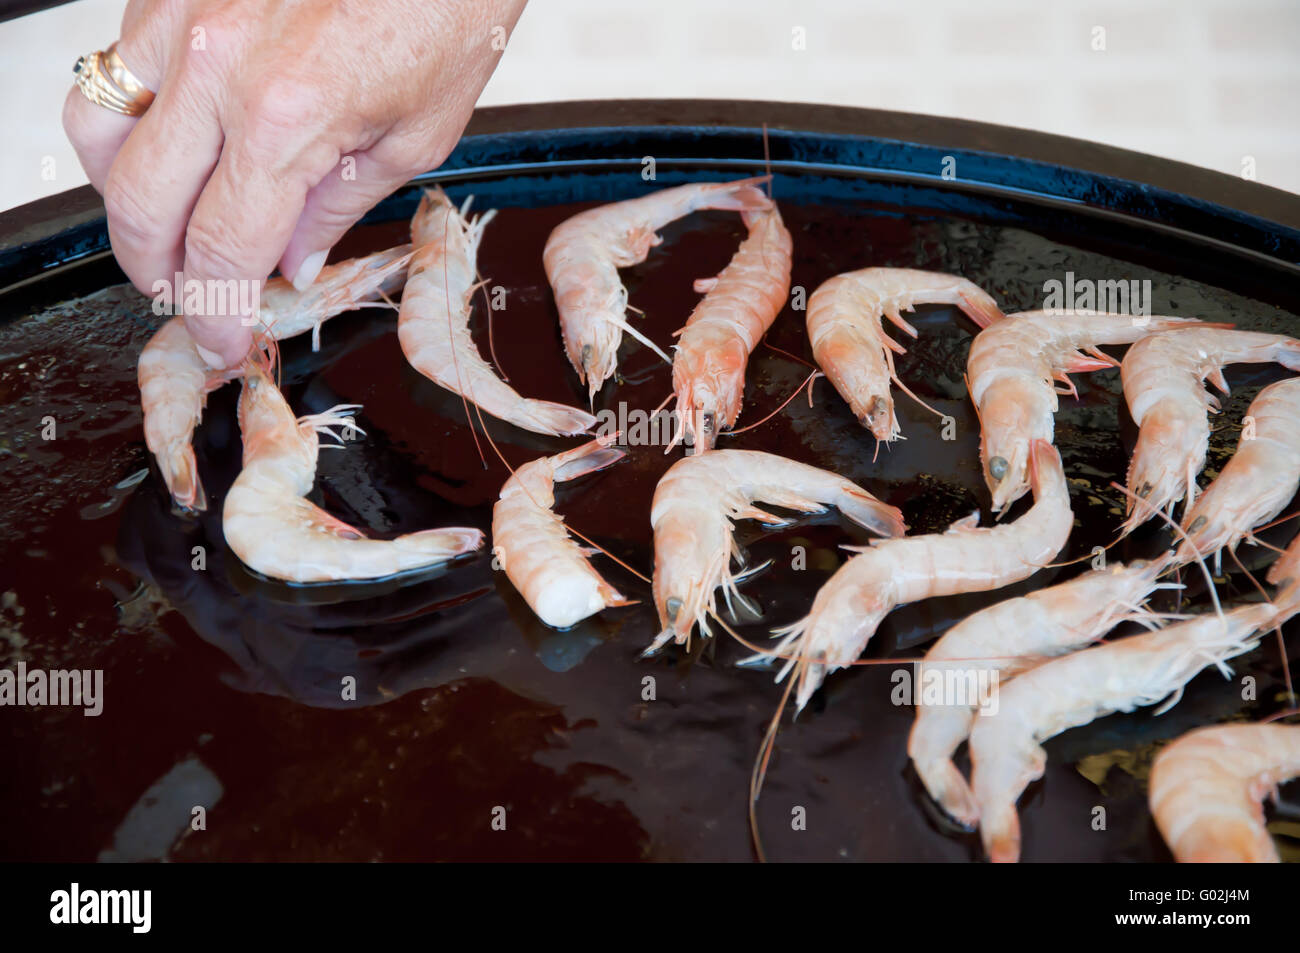 grilled prawns Stock Photo